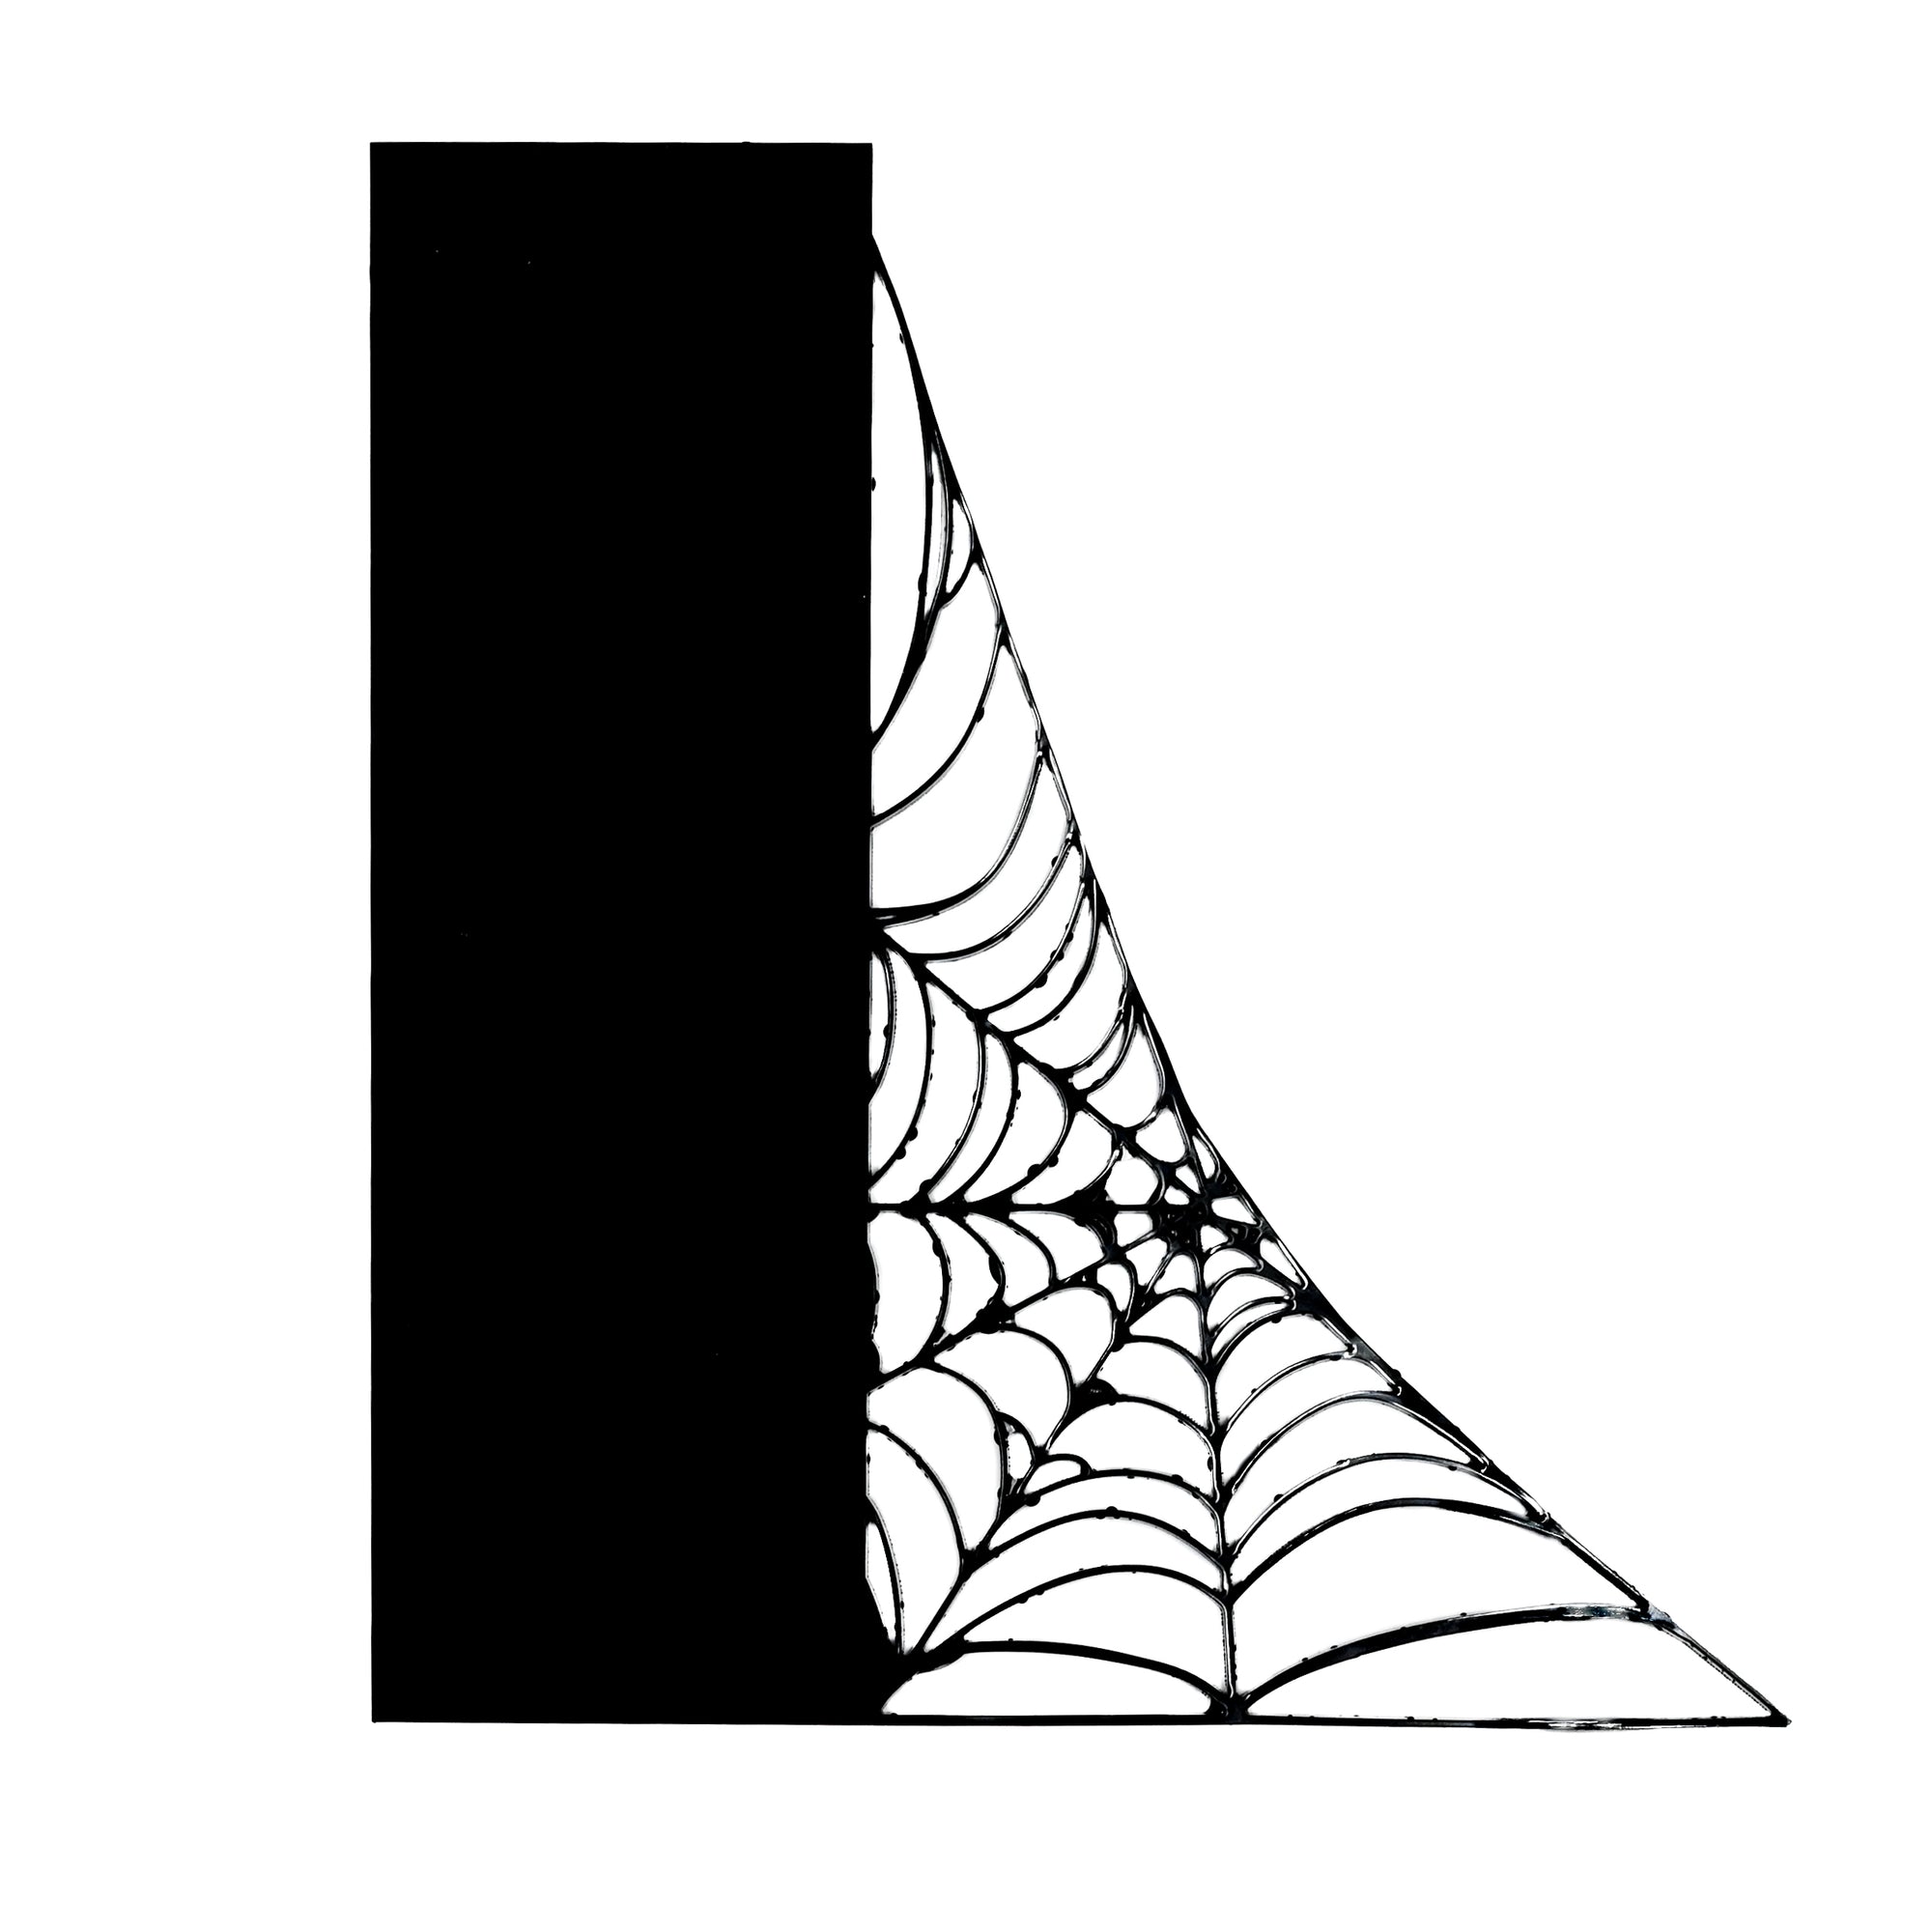 Spiderweb Bookshelf Silhouette